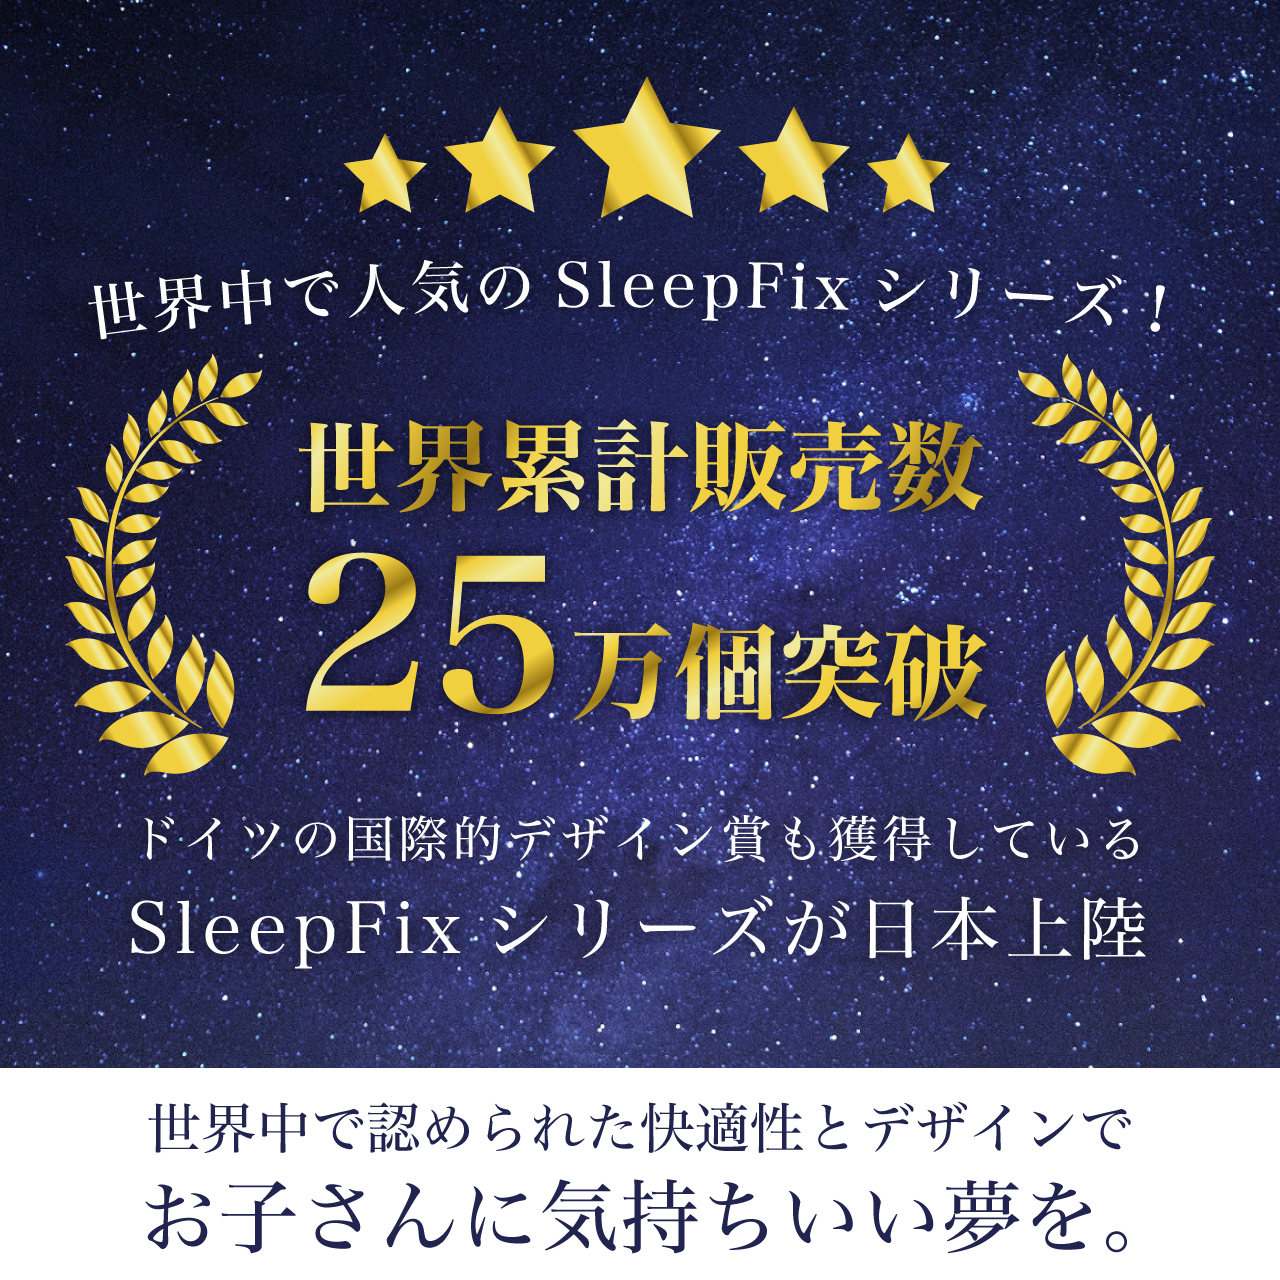 SANDINI SleepFix プレミアム ネックピロー ベビーサイズ 赤ちゃん 2017年ドイツ・デザイン・アワード推薦 かわいい 首 枕 固定  日本正規品 機内リラックスグッズ